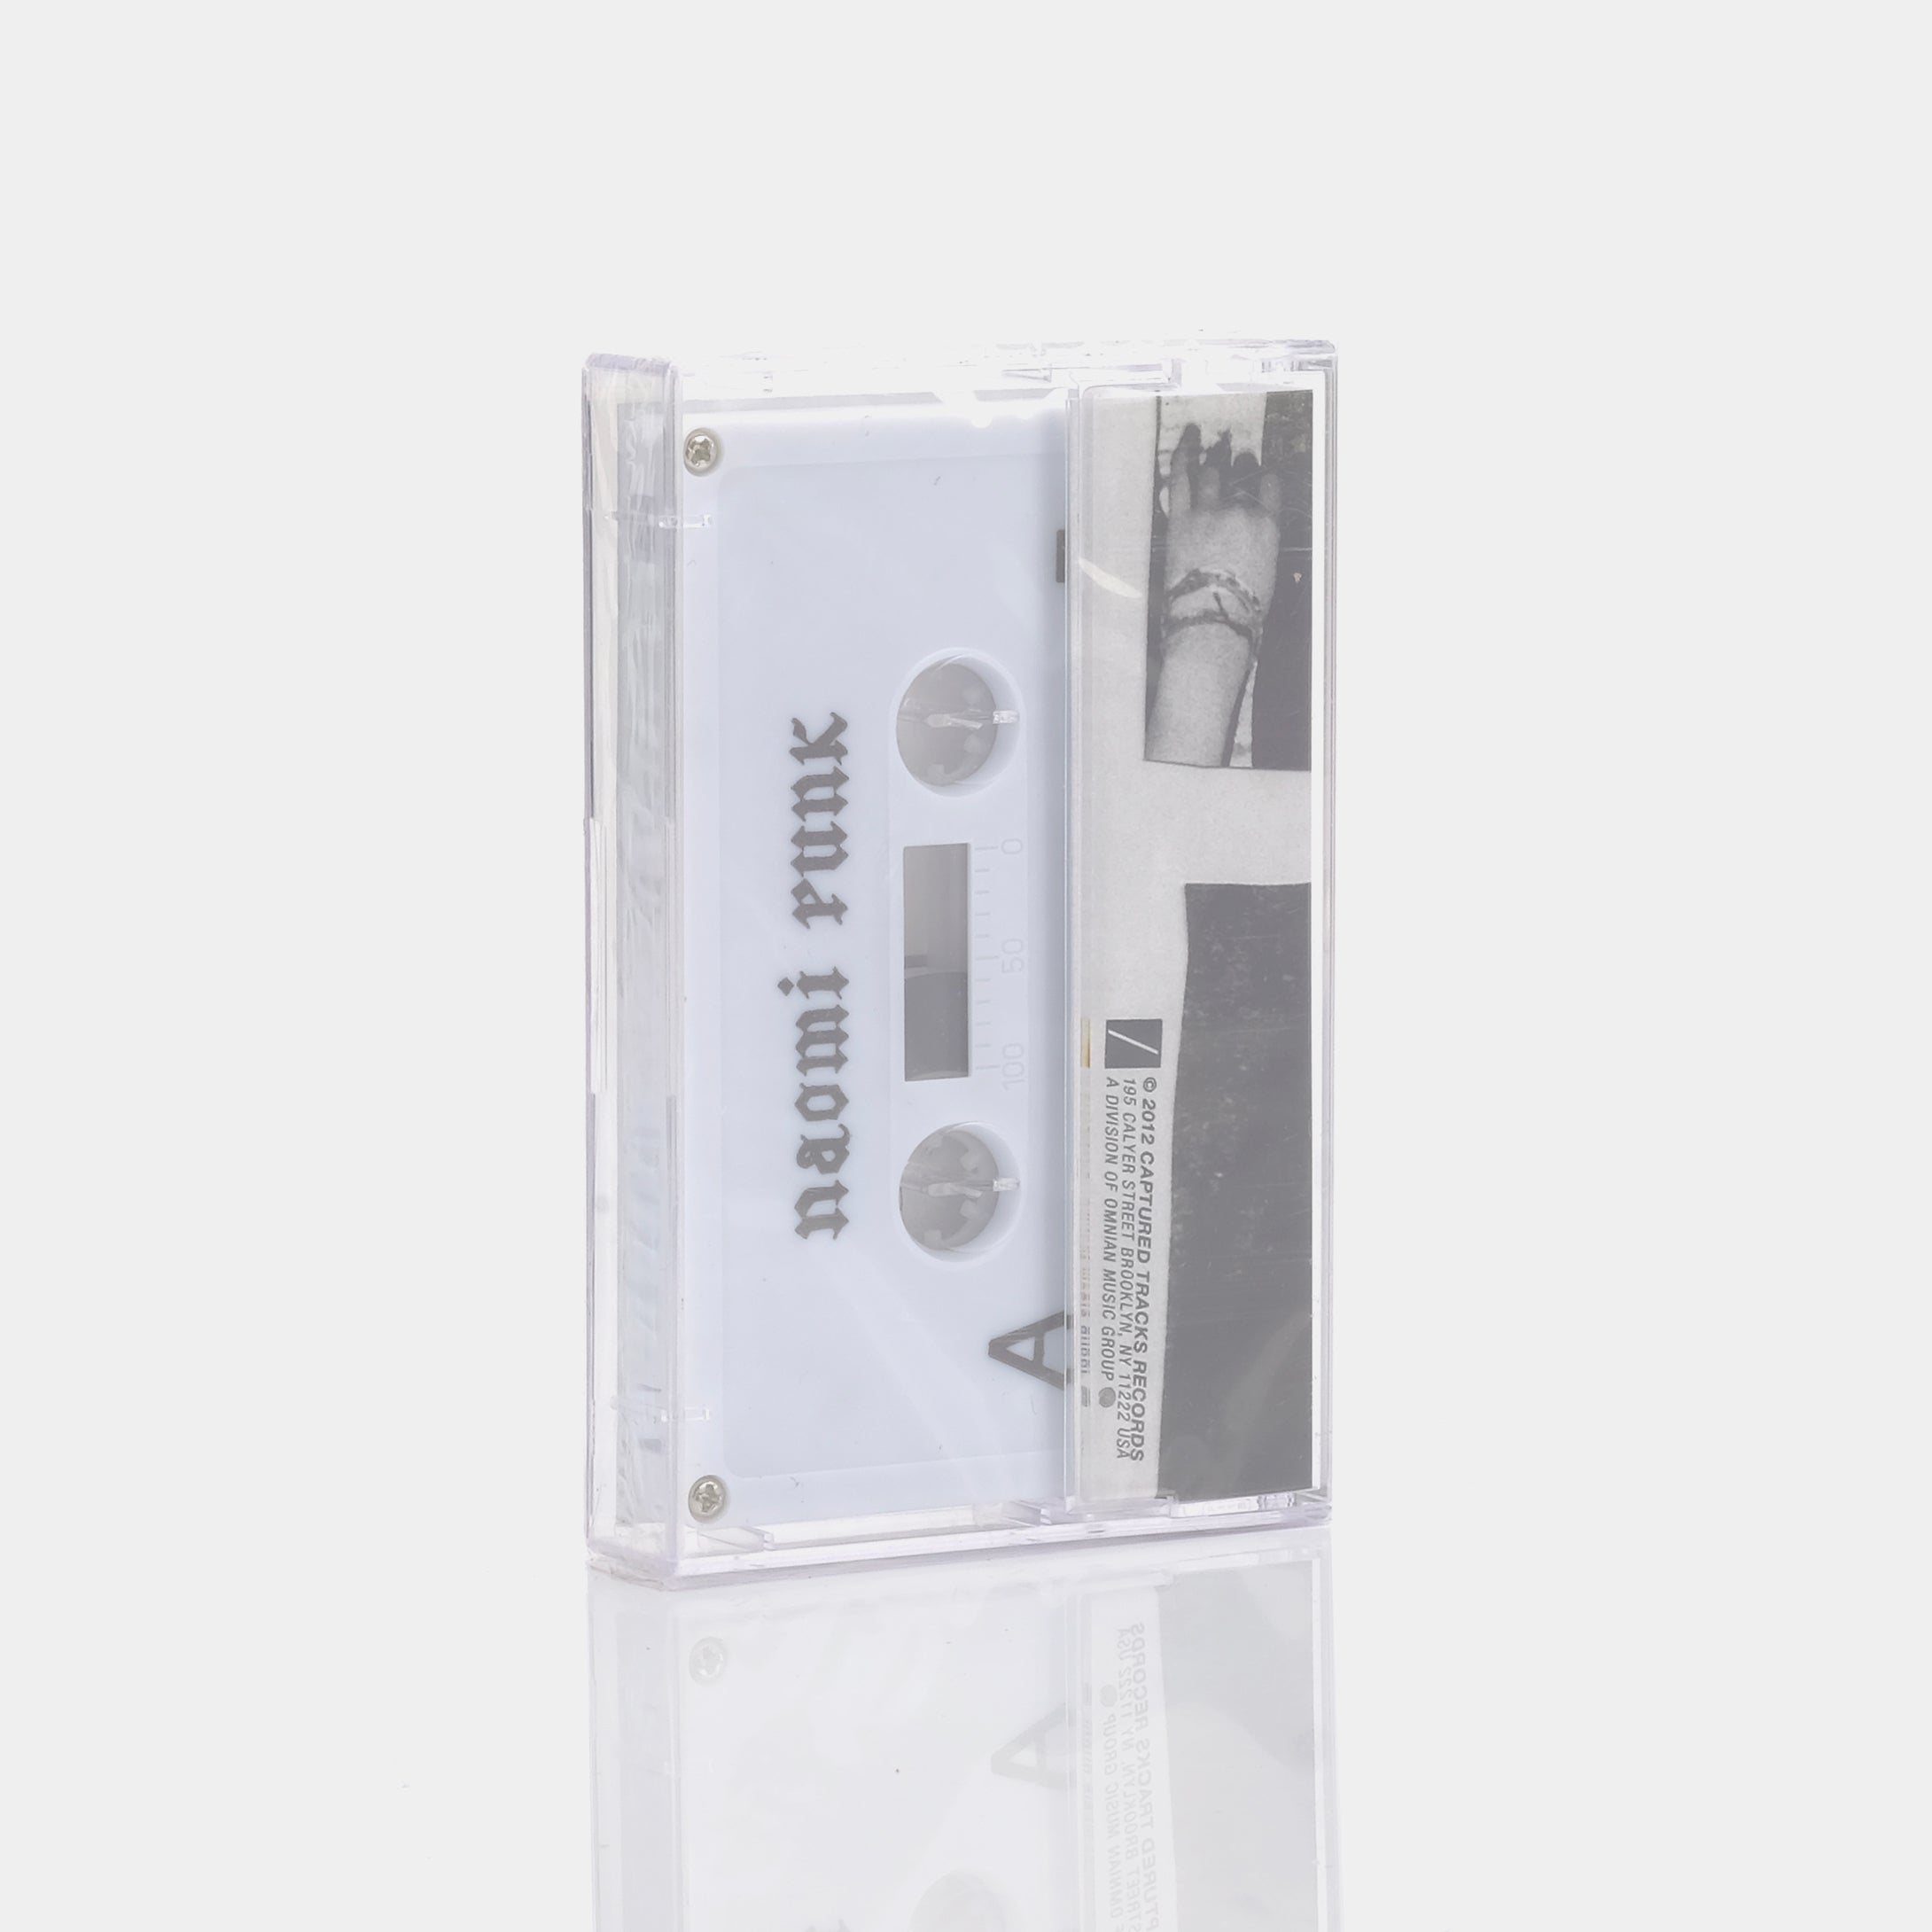 Naomi Punk - The Feeling Cassette Tape